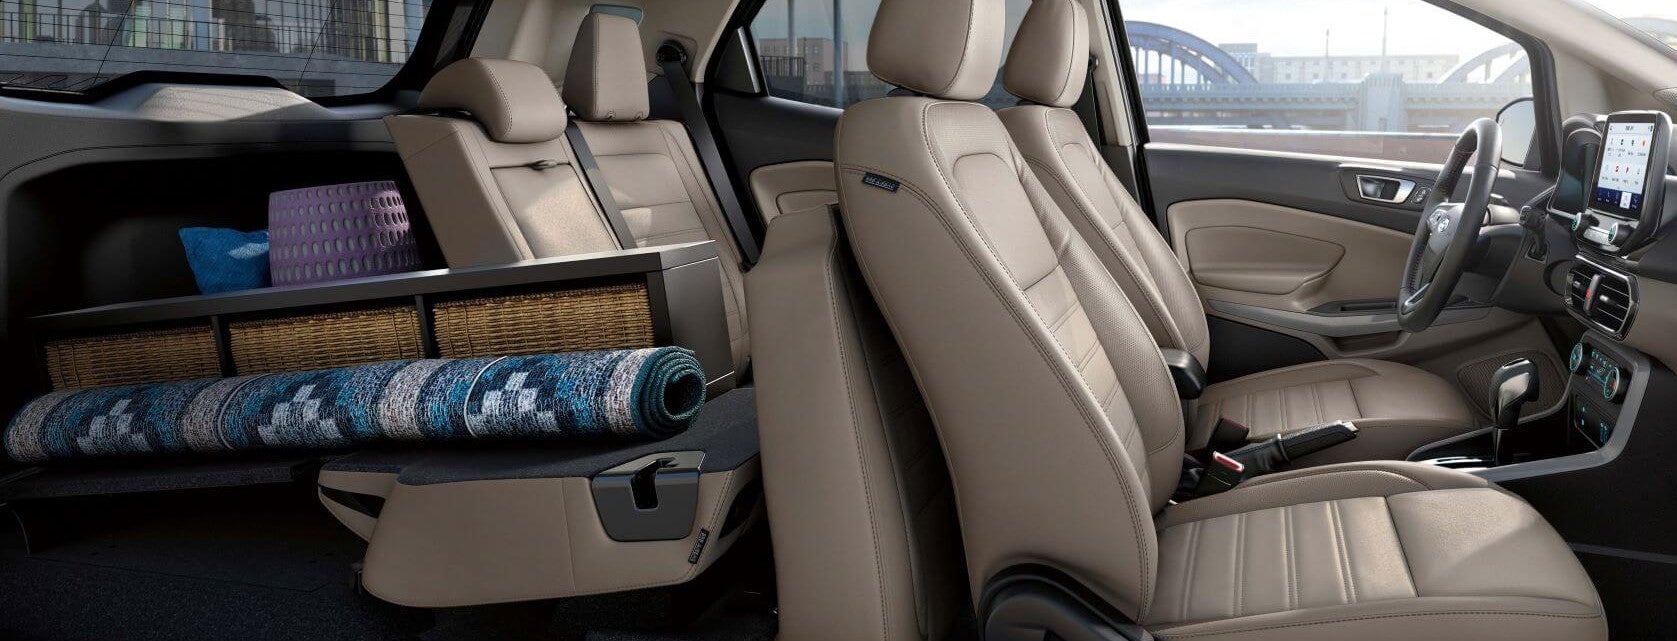 2021 Ford Ecosport Interior Cabin